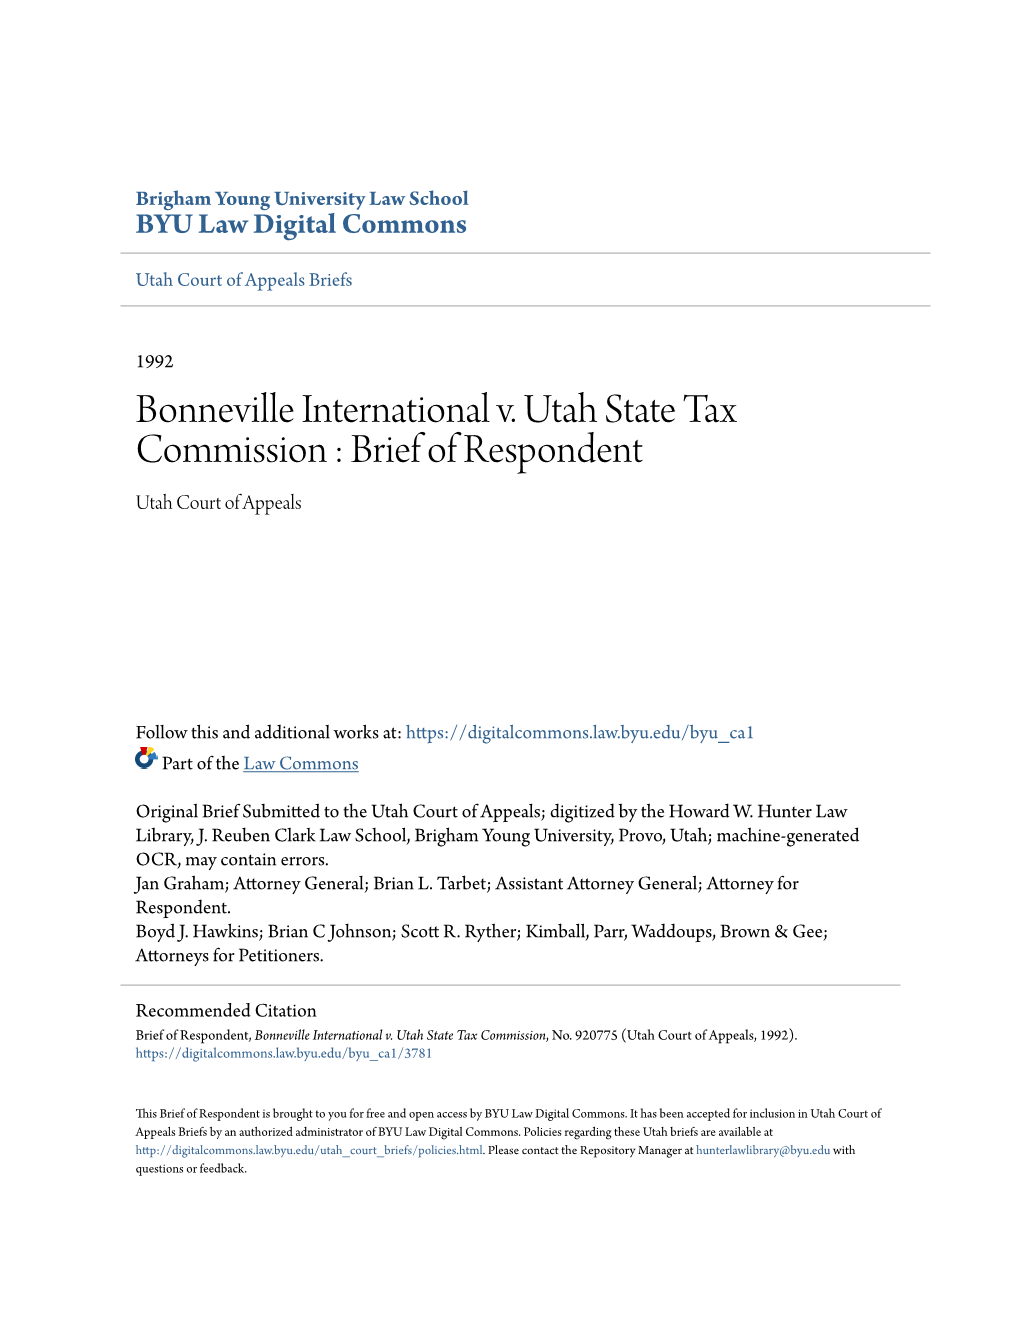 Bonneville International V. Utah State Tax Commission : Brief of Respondent Utah Court of Appeals